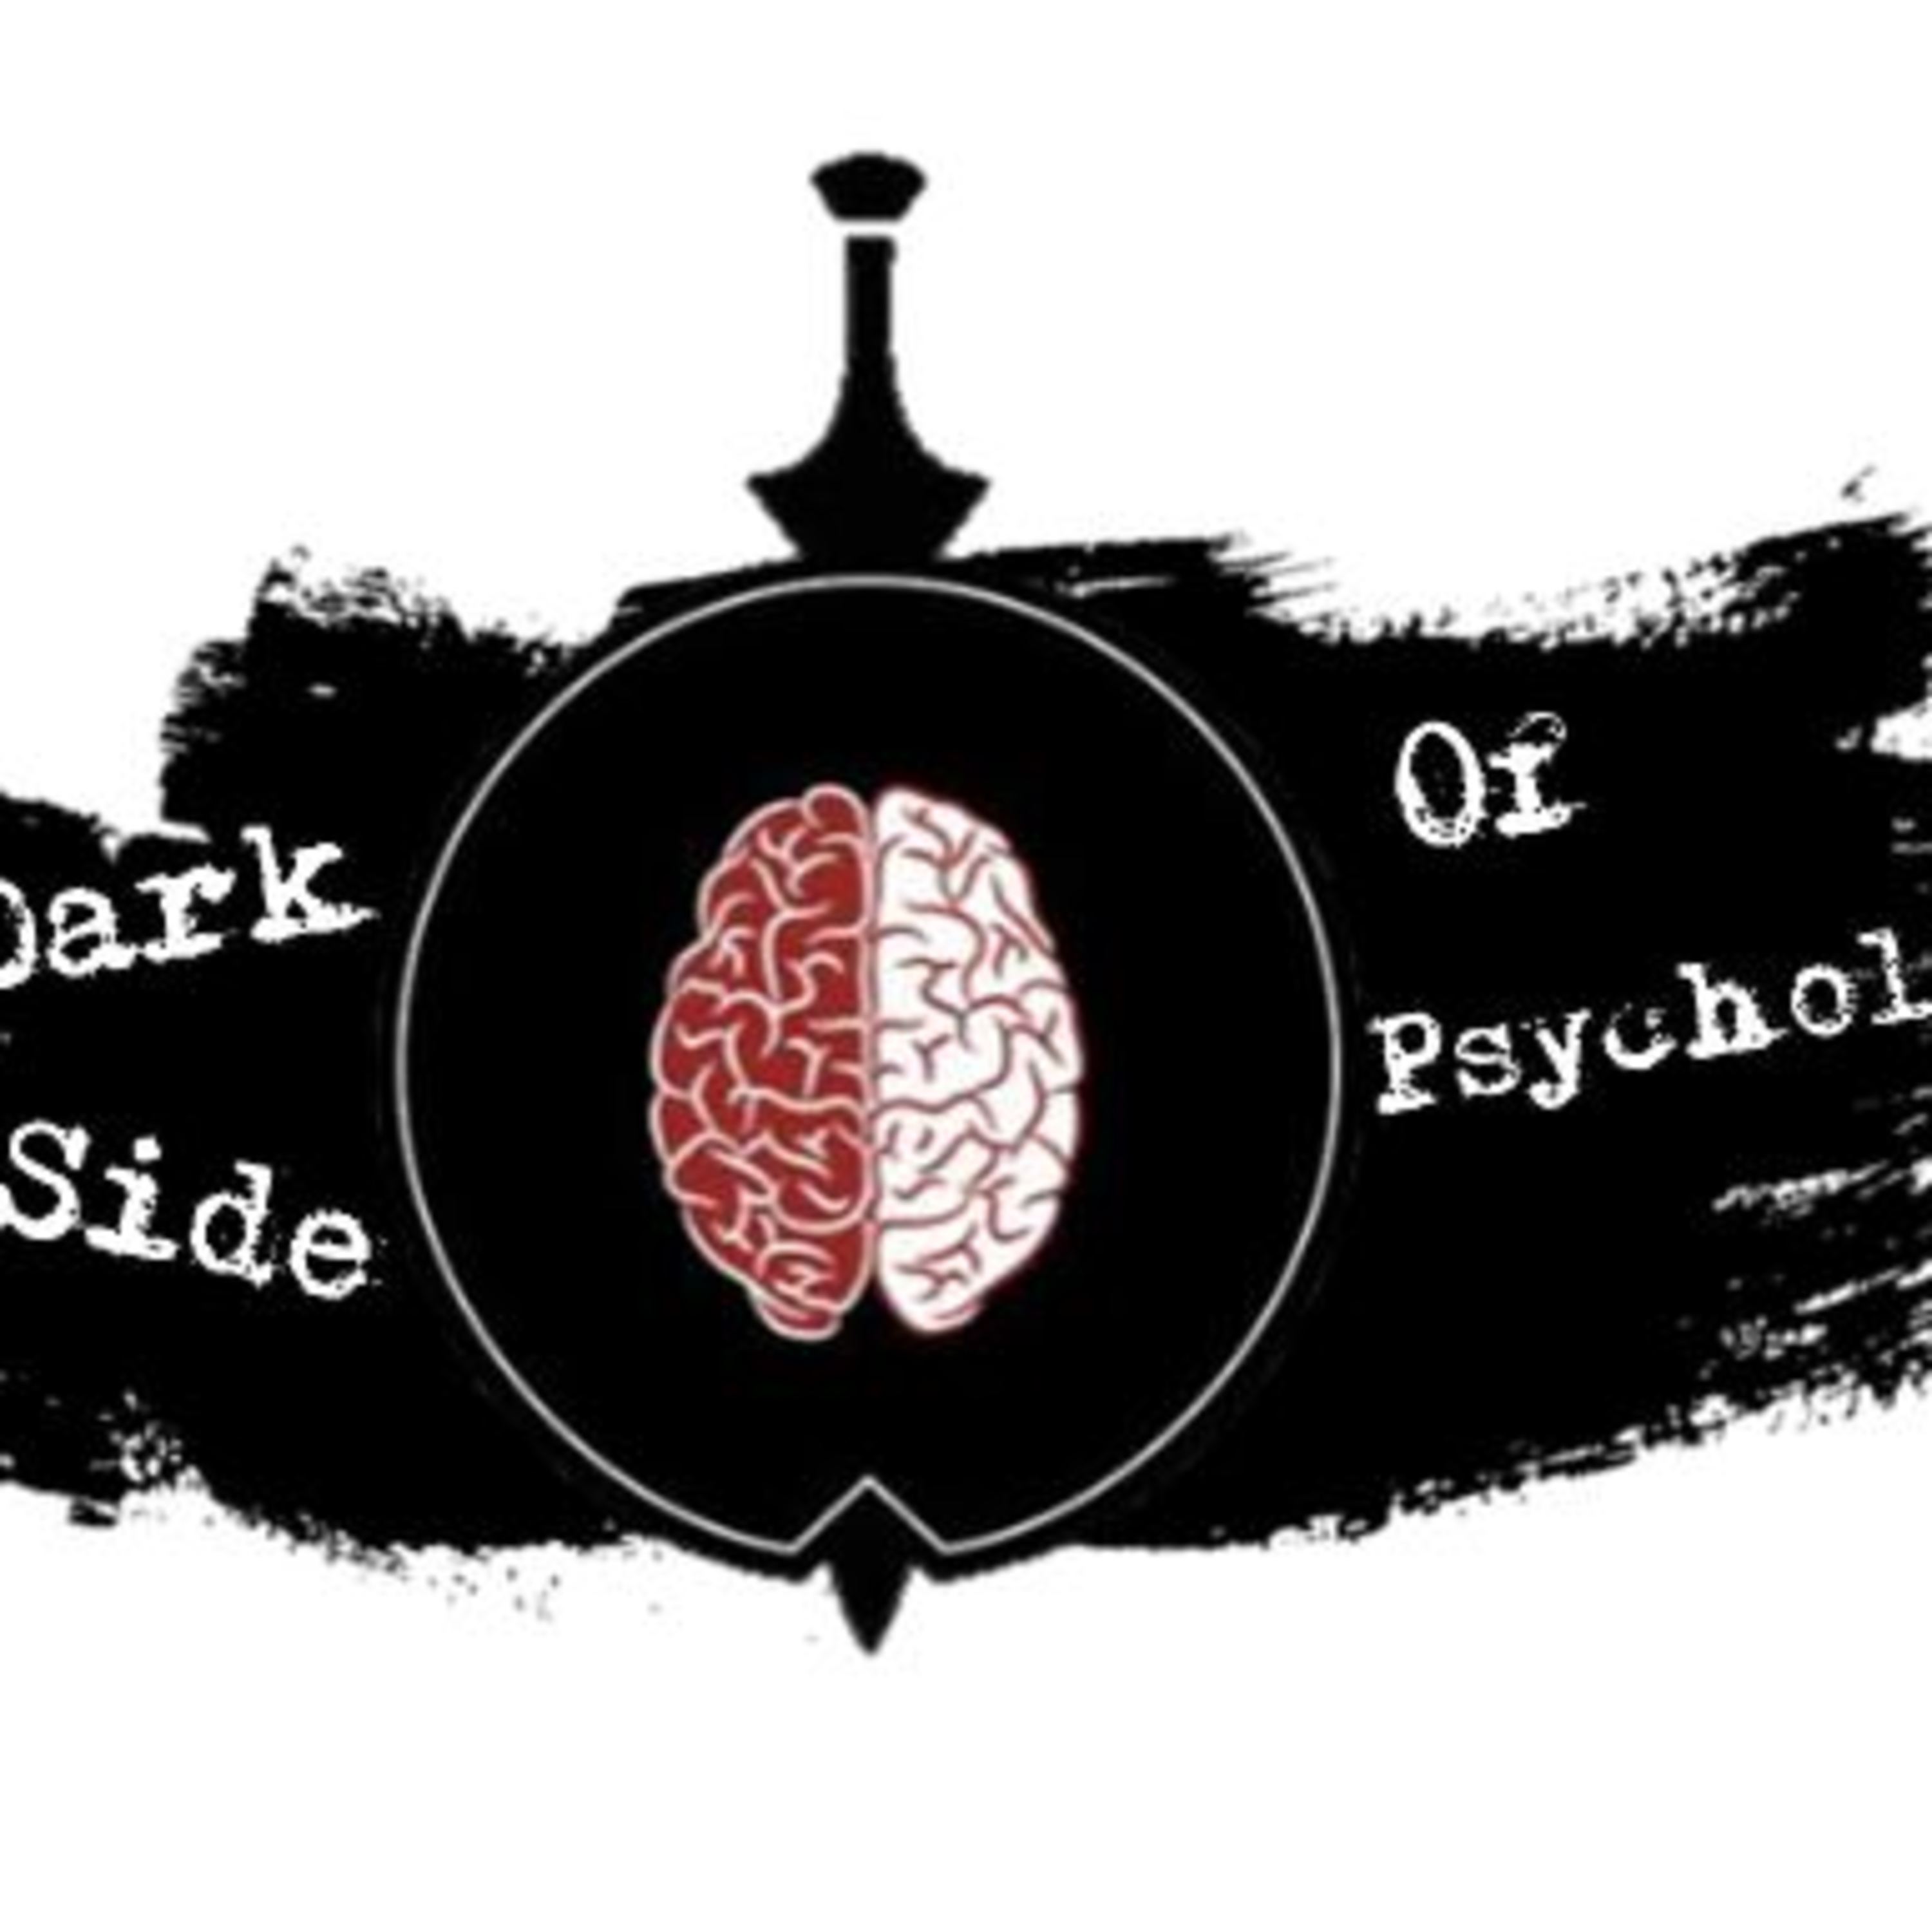 My dark side psychology